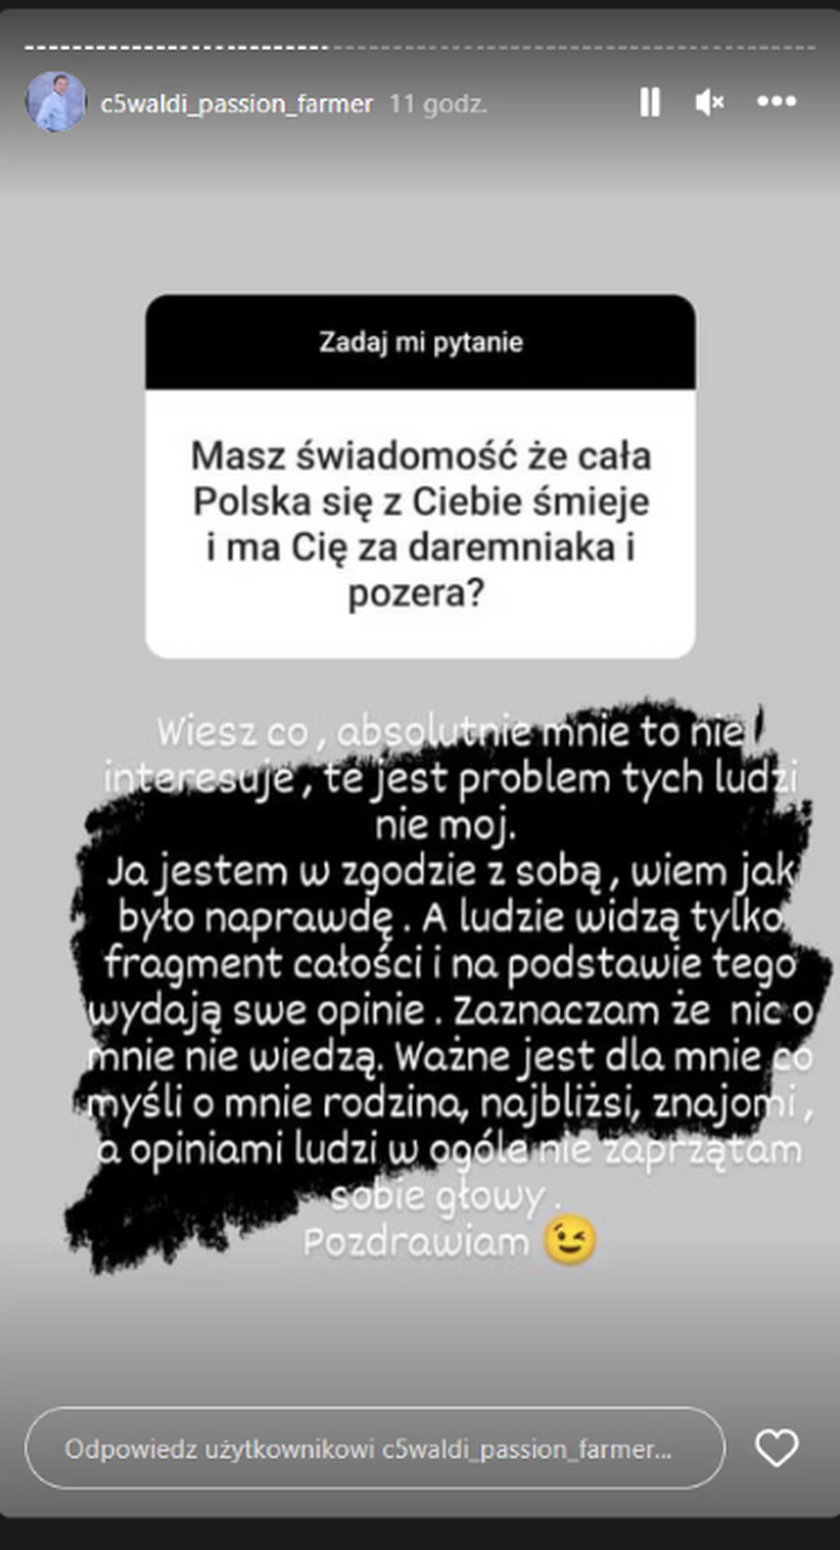 "Rolnik szuka żony", TVP, Waldemar.